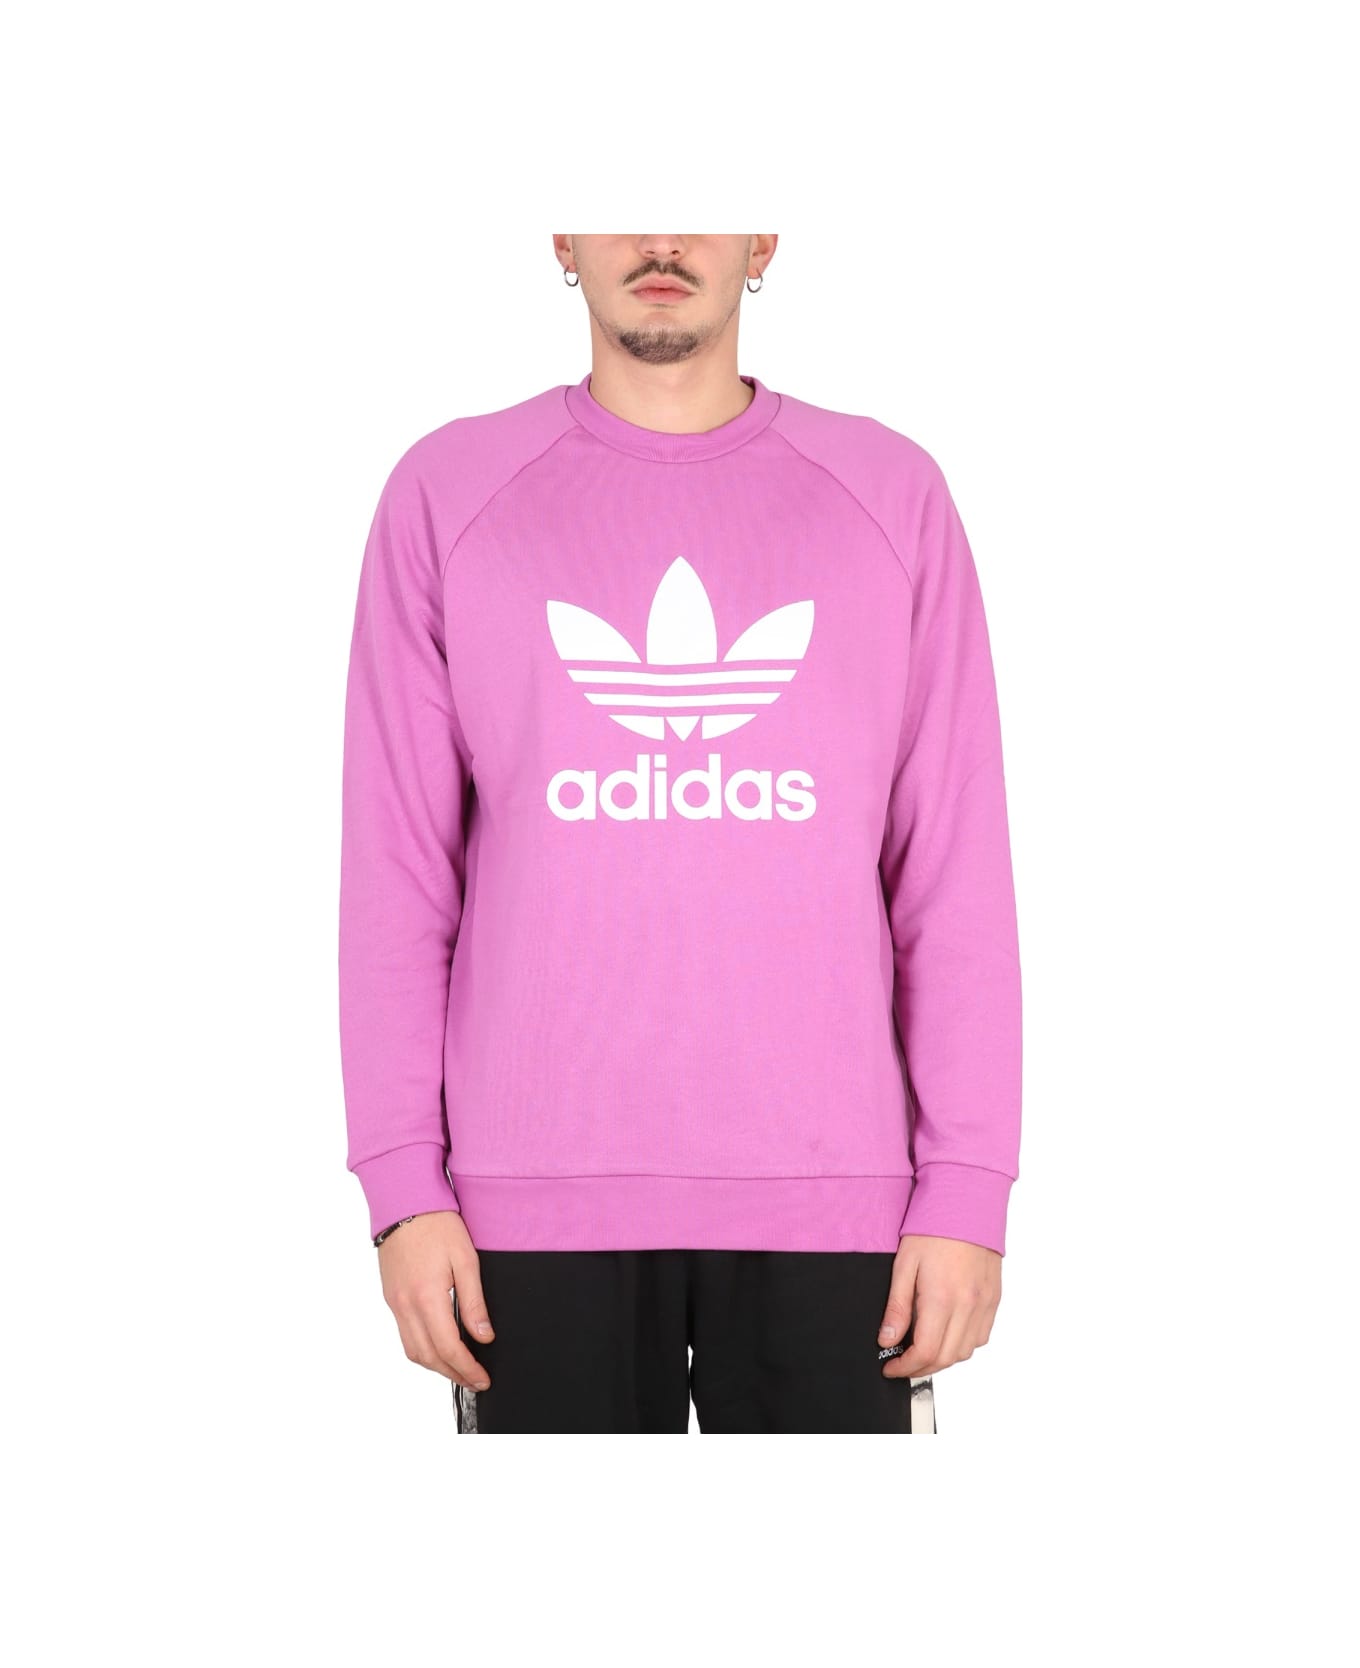 Adidas Originals Crewneck Sweatshirt - PINK